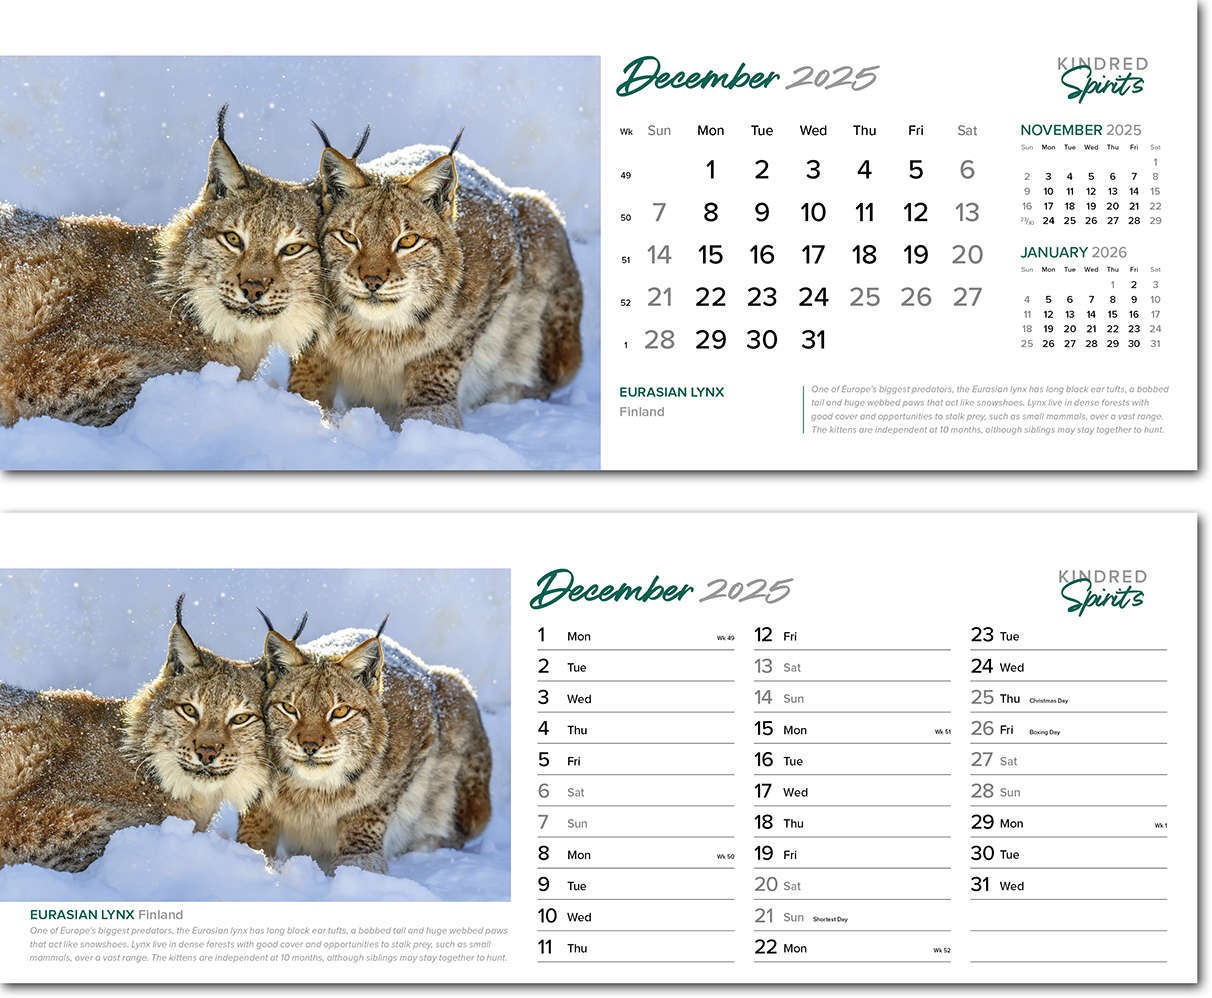 Kindred Spirits Premium Lined Easel Desk Calendar